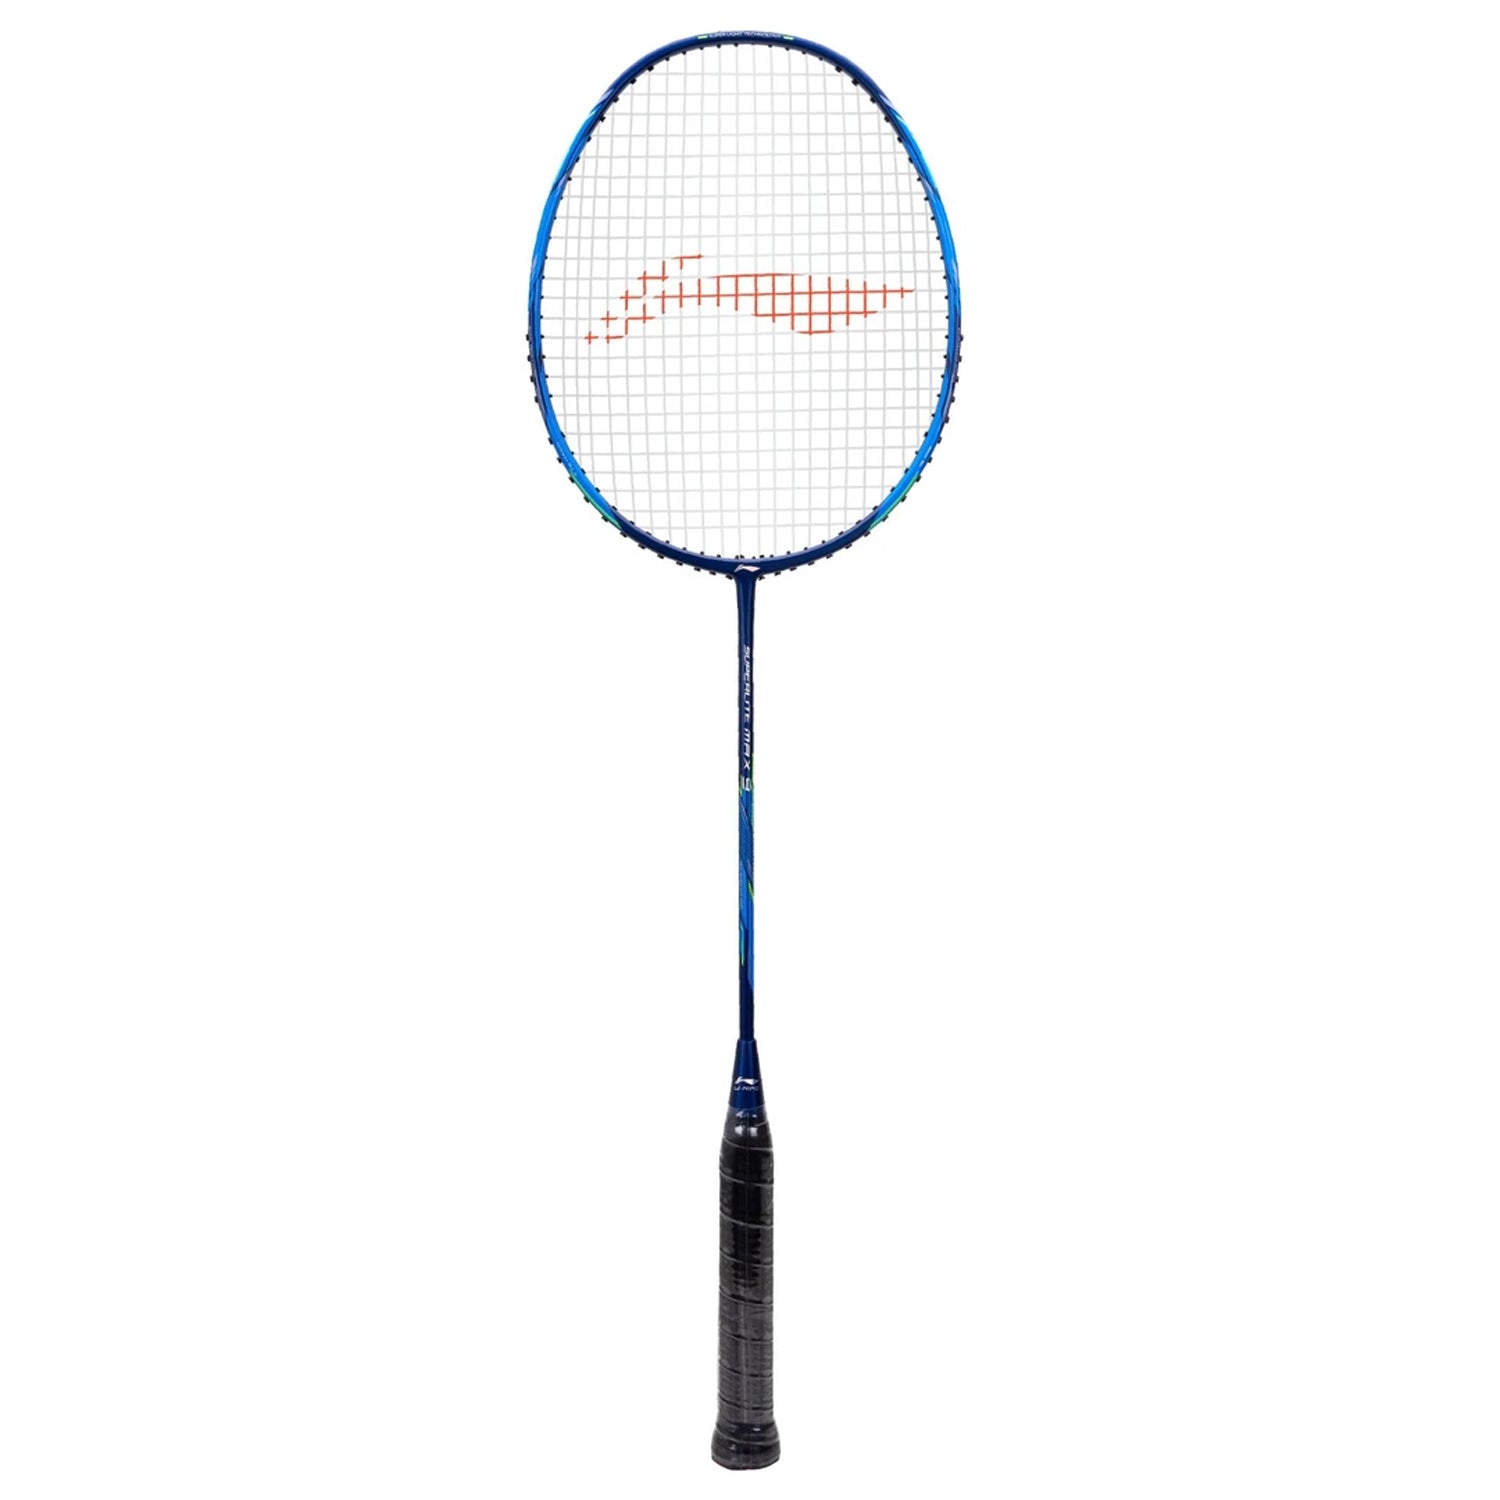 Li-Ning G-Force Superlite Max 9 Strung Badminton Racquet, Navy/Blue - Best Price online Prokicksports.com